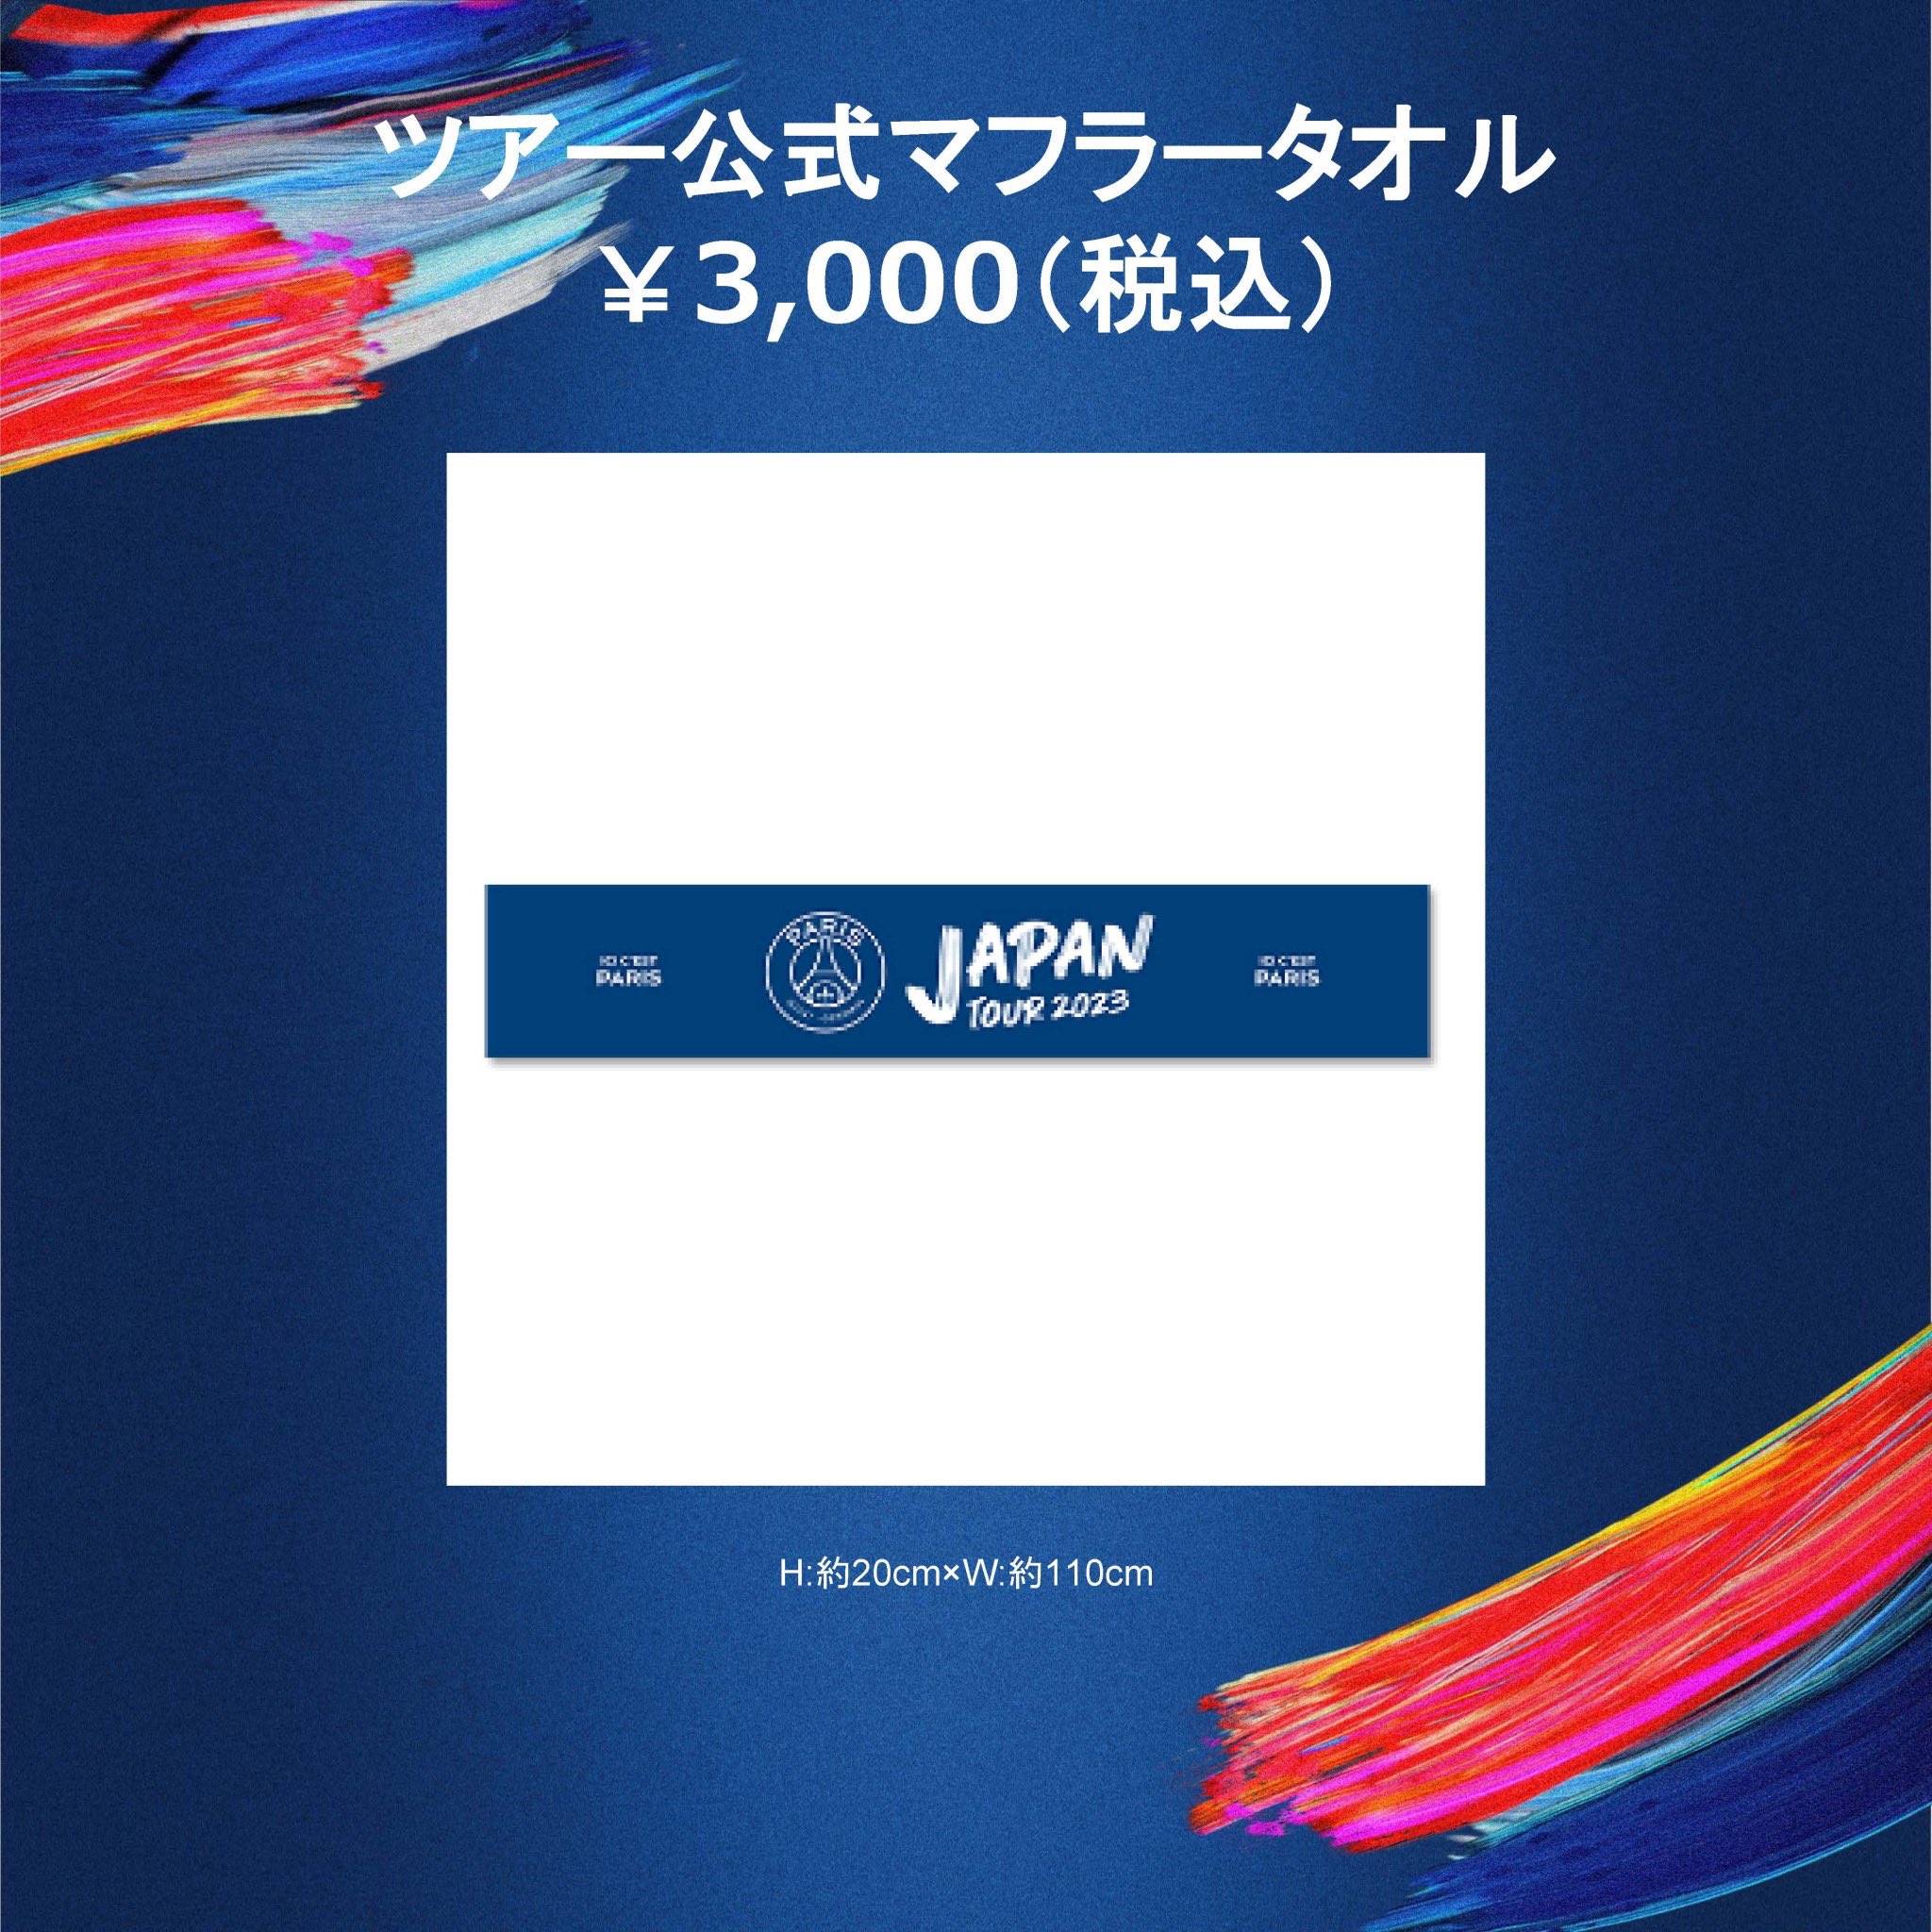 PSG JAPAN TOUR 2023 on Twitter: 